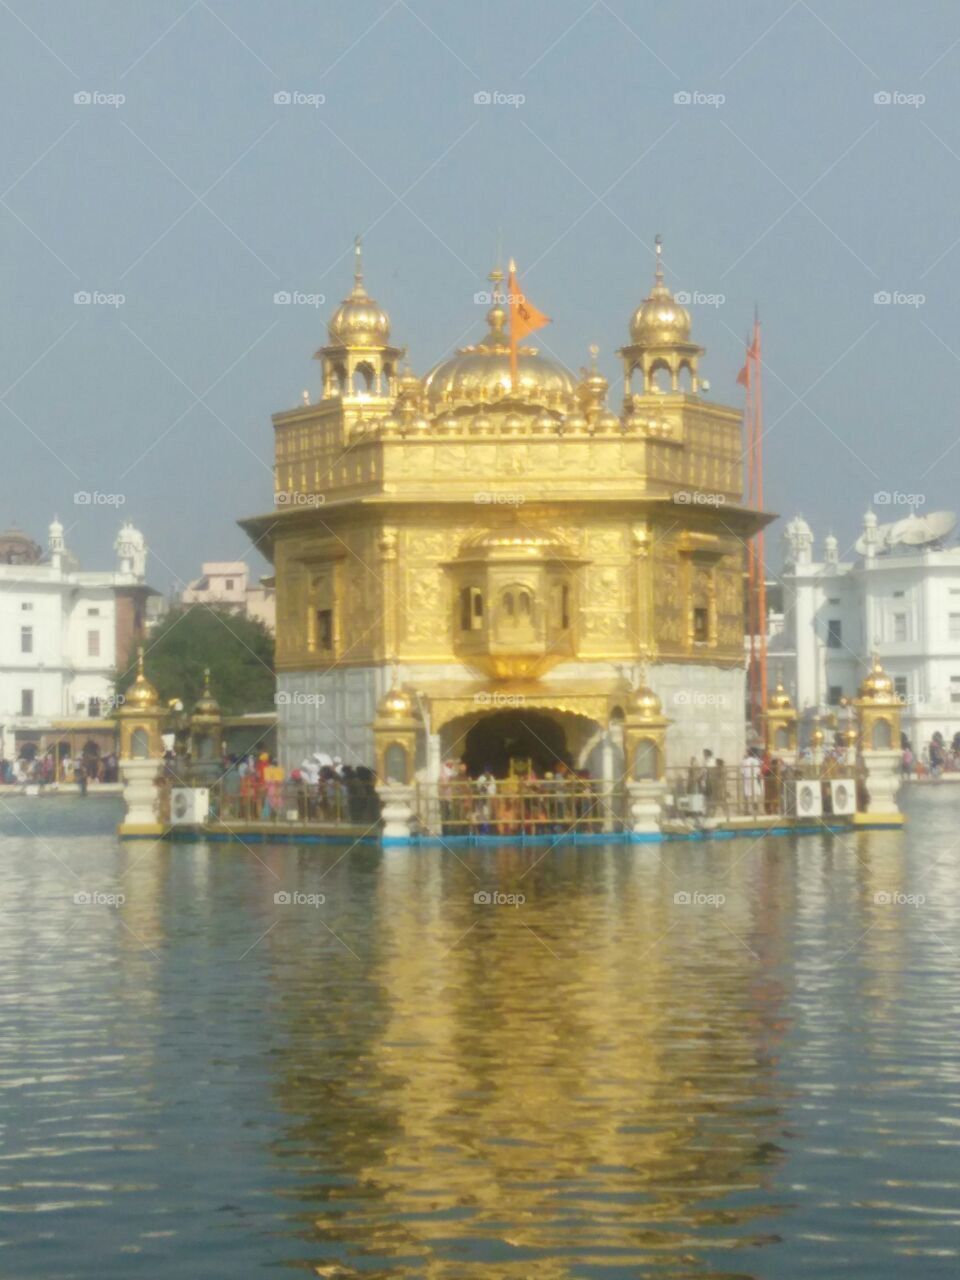 Golden Temple in amritsar